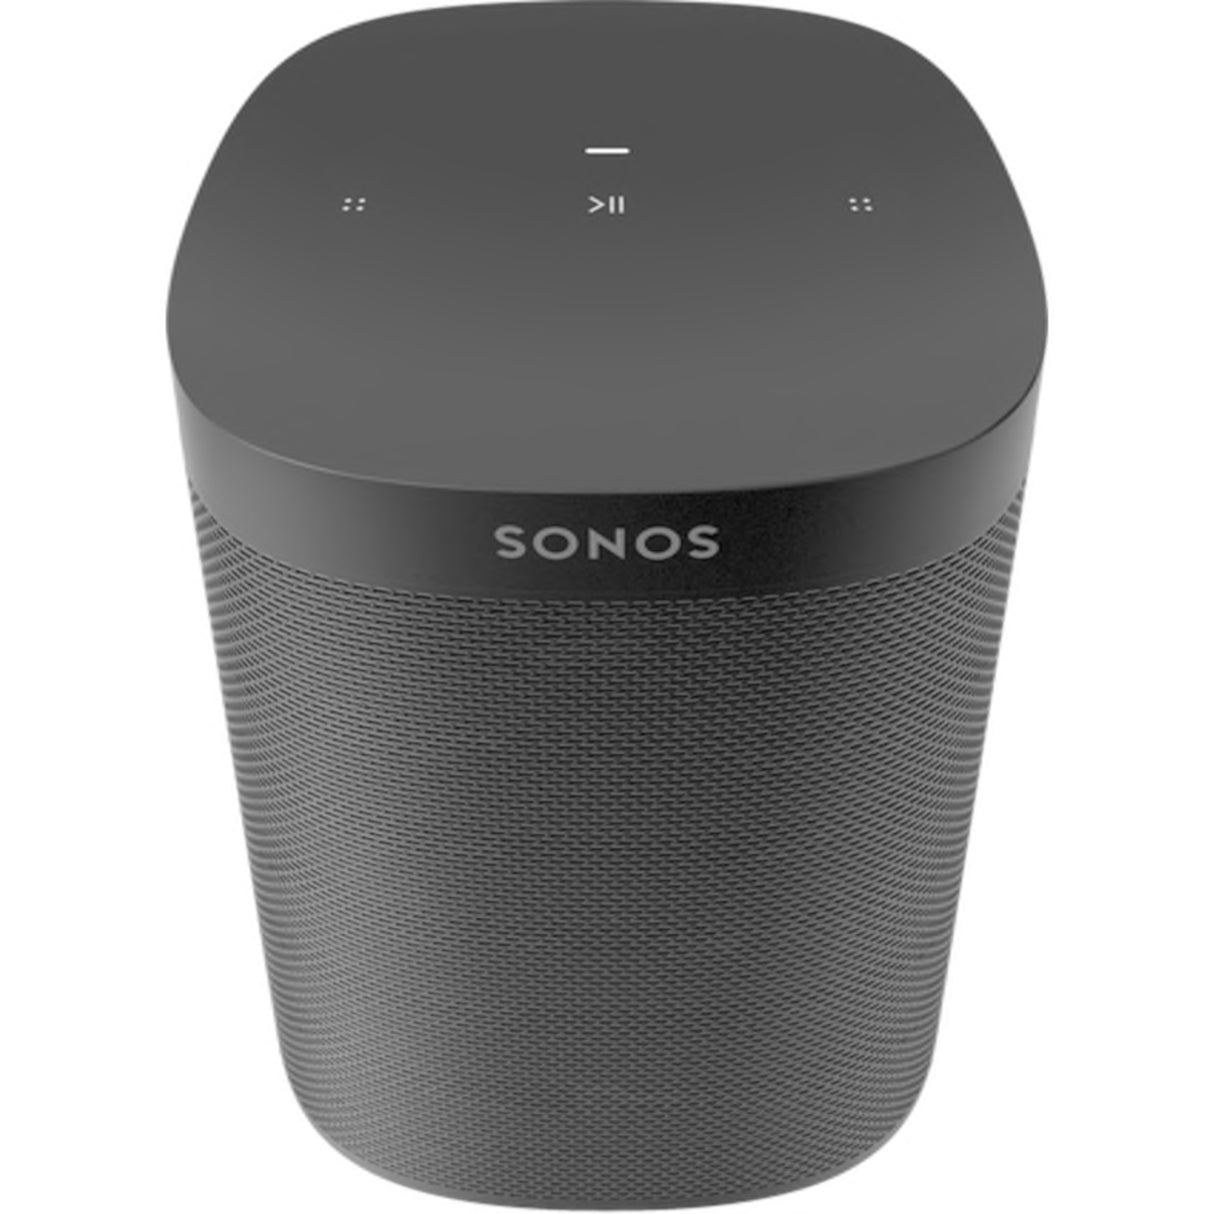 Sonos One SL Wireless streaming music speaker